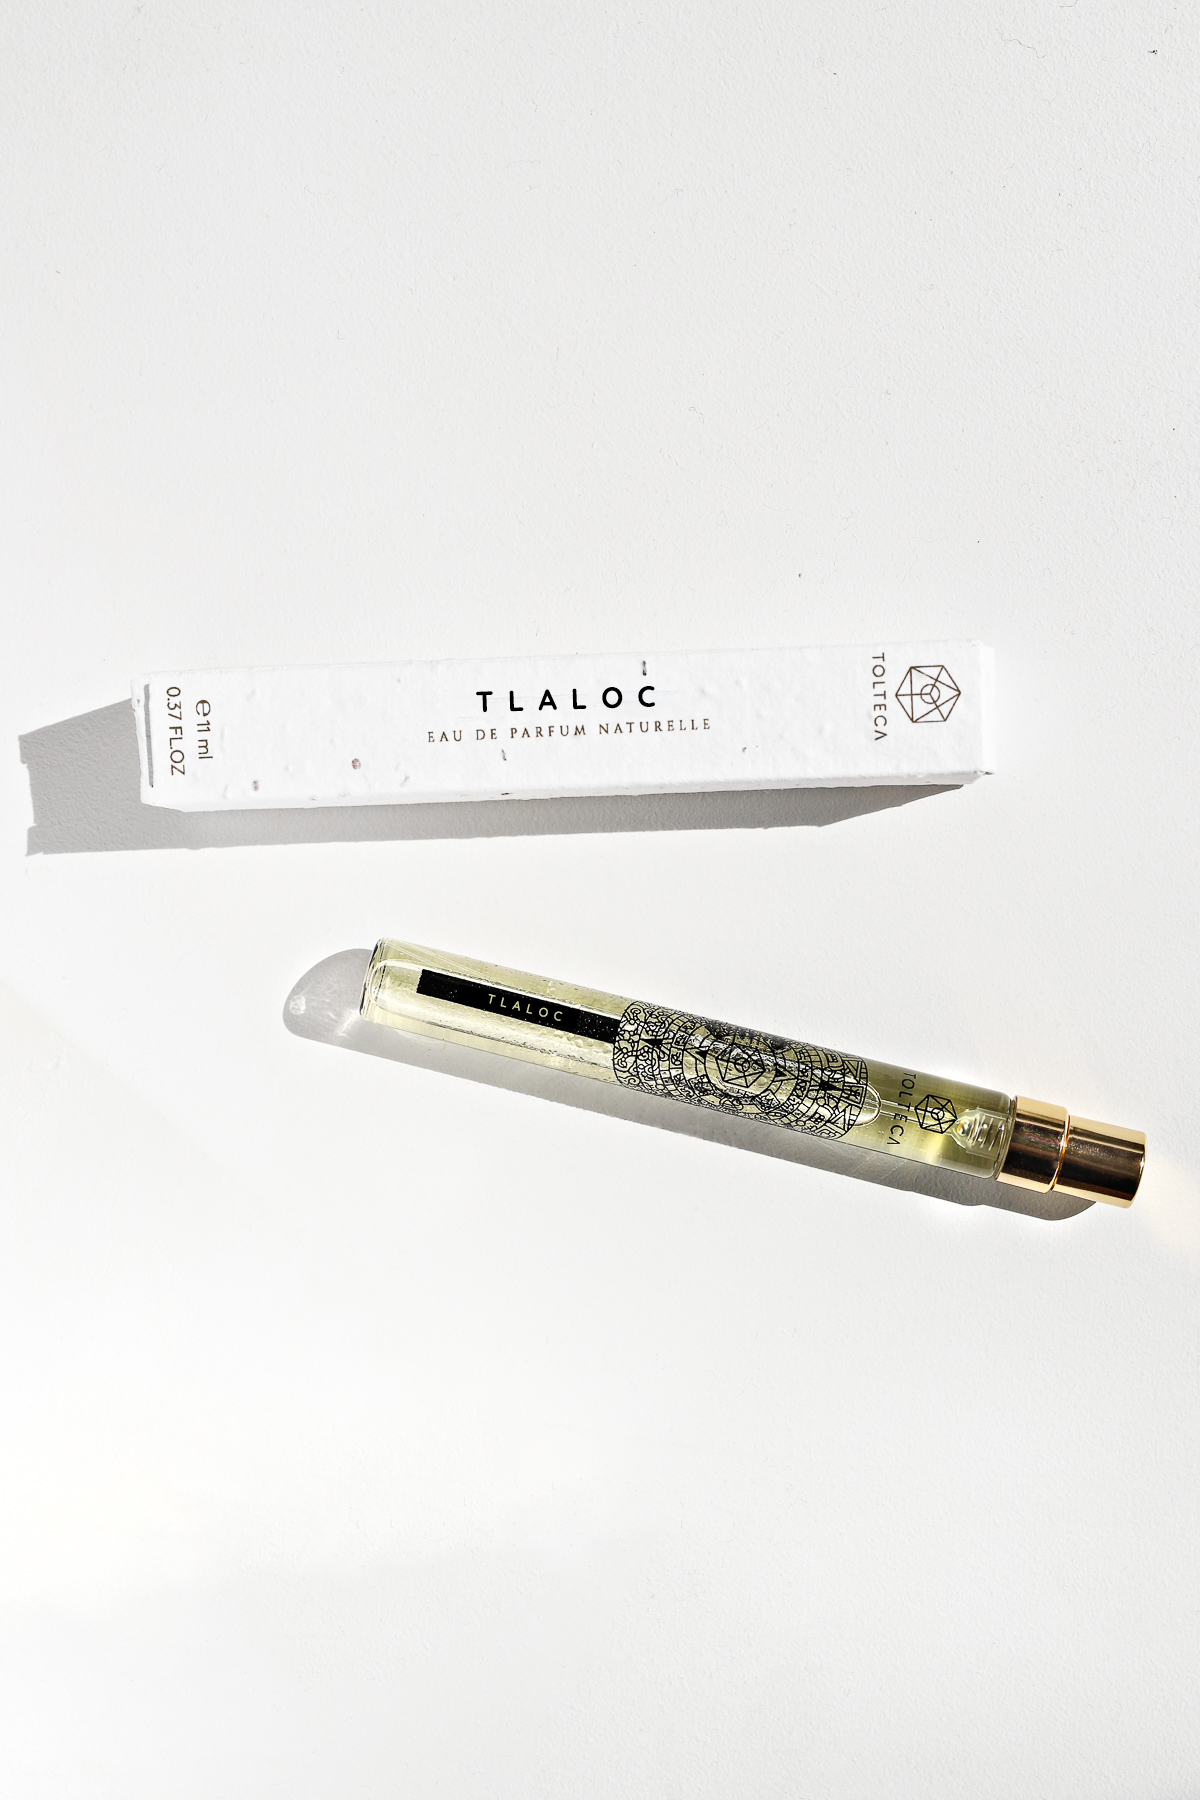 Tolteca parfum TLALOC format  voyage